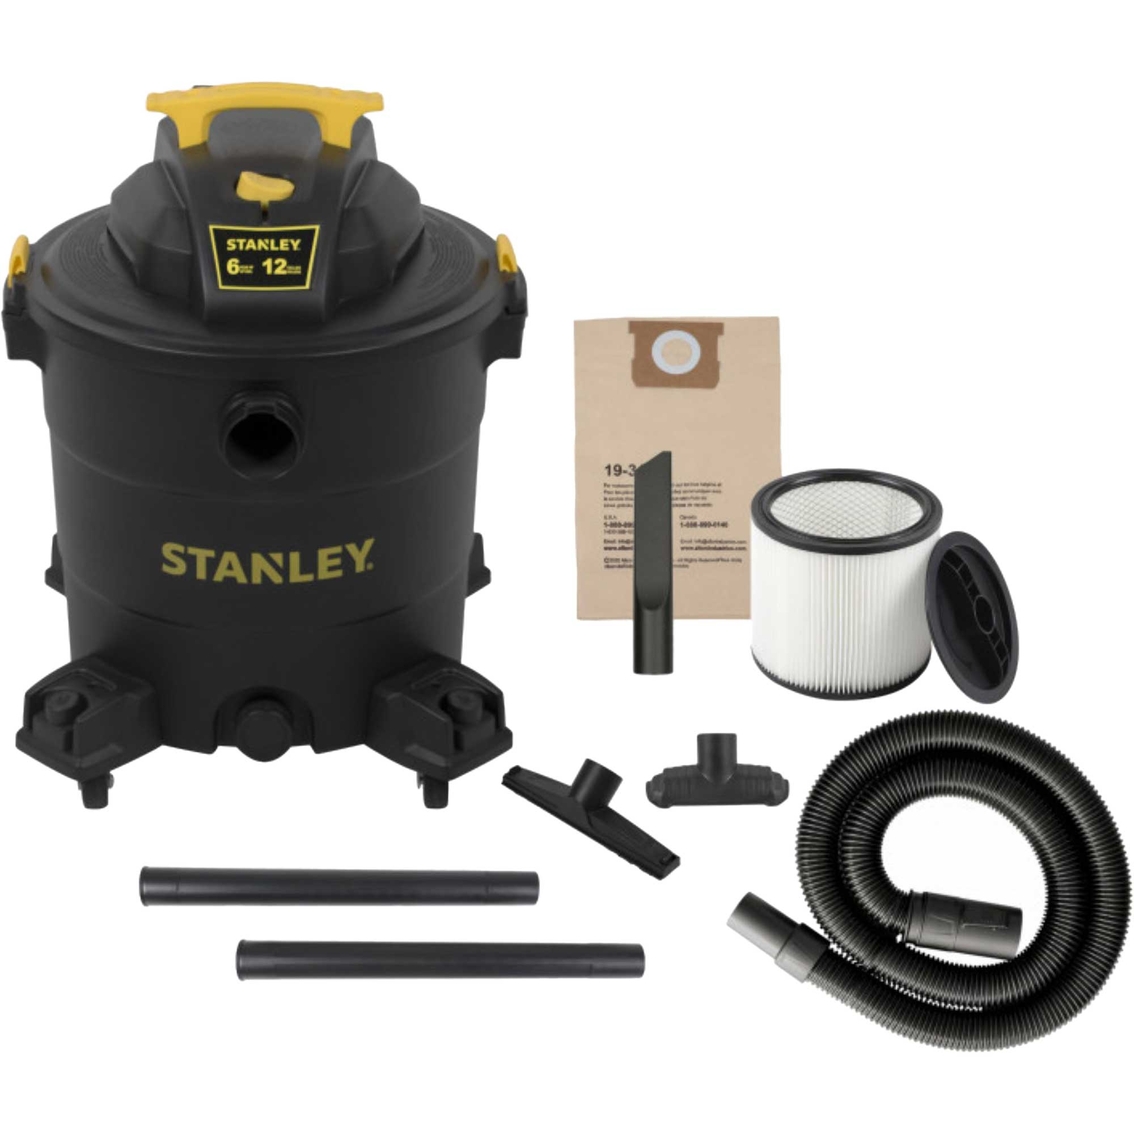 Stanley 12 gal. 6 Horsepower Wet/Dry Vacuum - Image 5 of 6